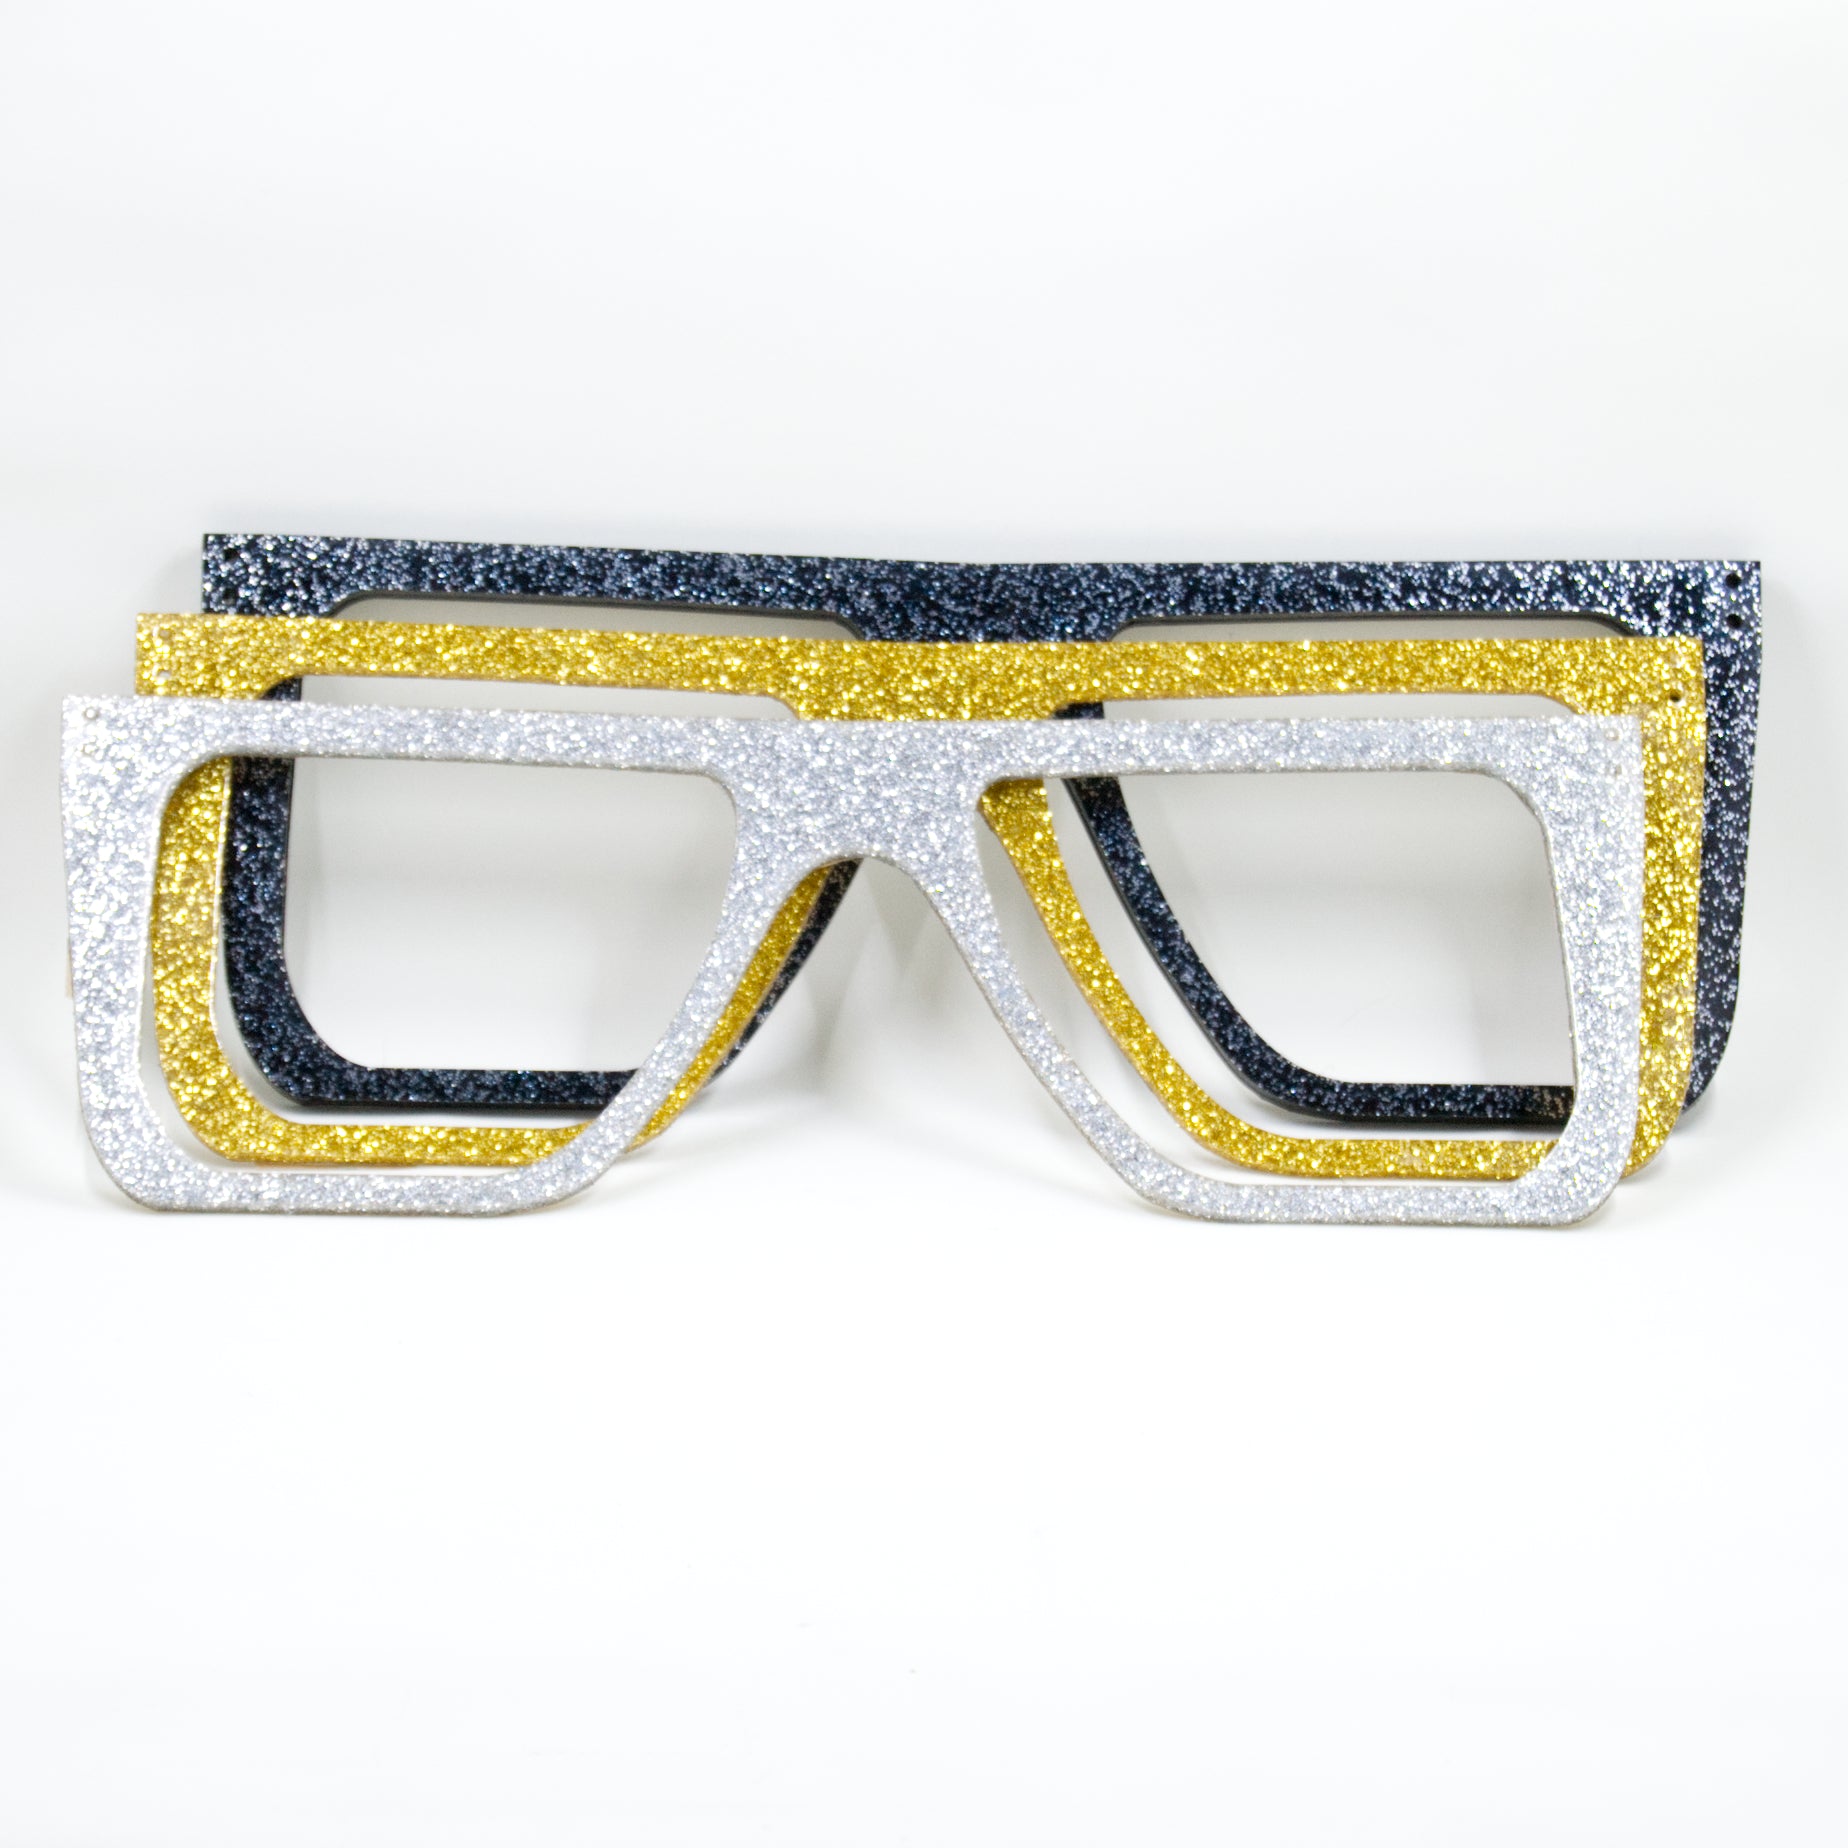 Acrylic Nerdy Fursuit Glasses